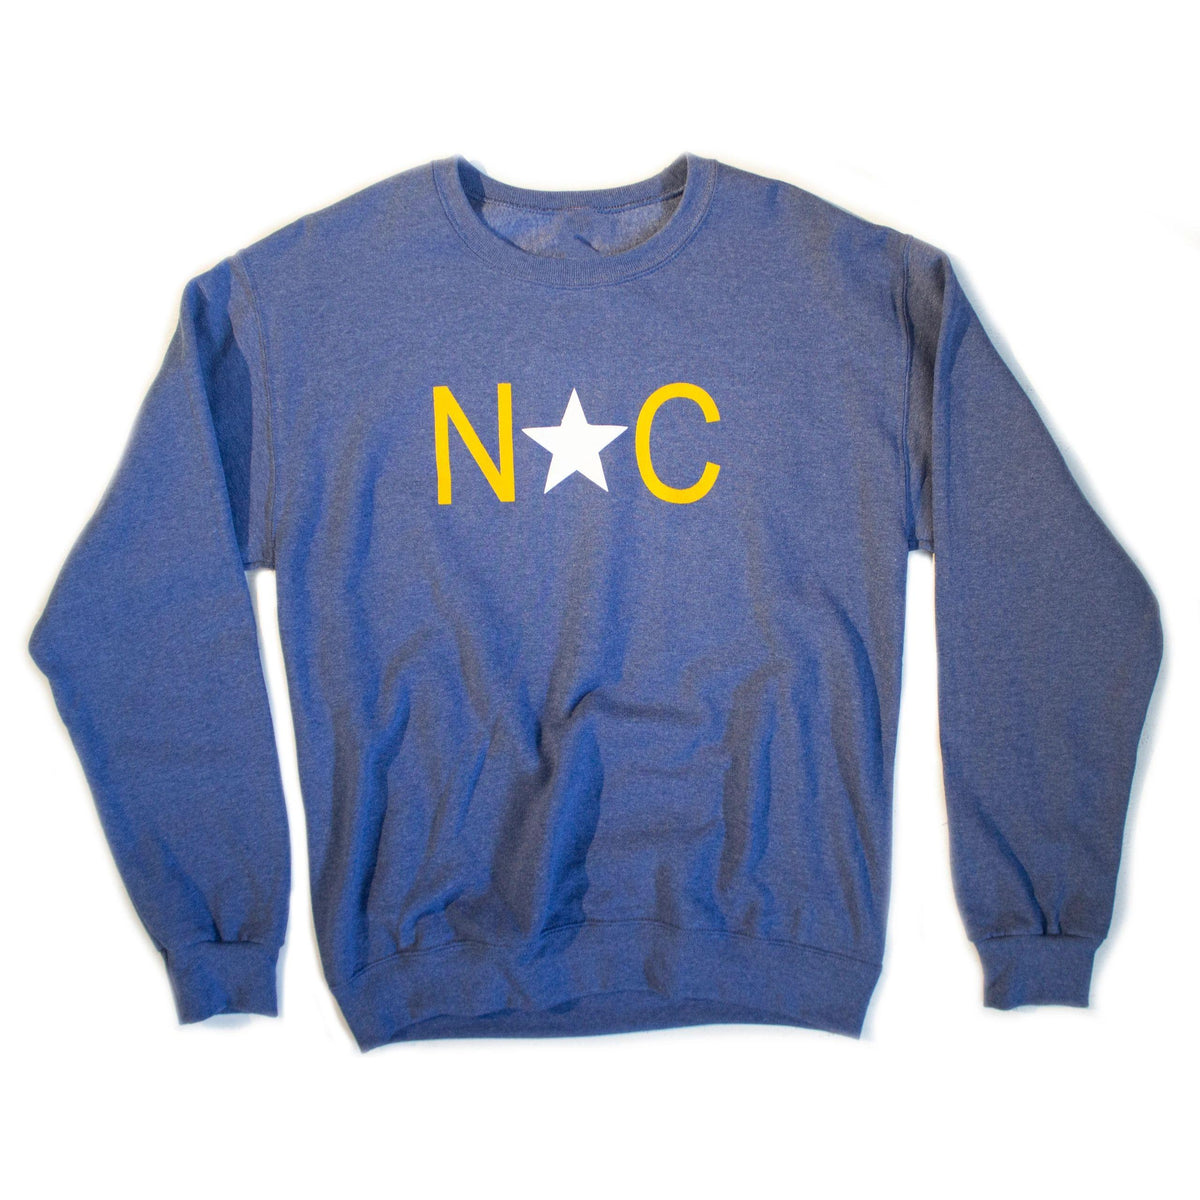 slrevivalco Our Most Popular North Carolina T-Shirt, NC Star Baseball Jersey S